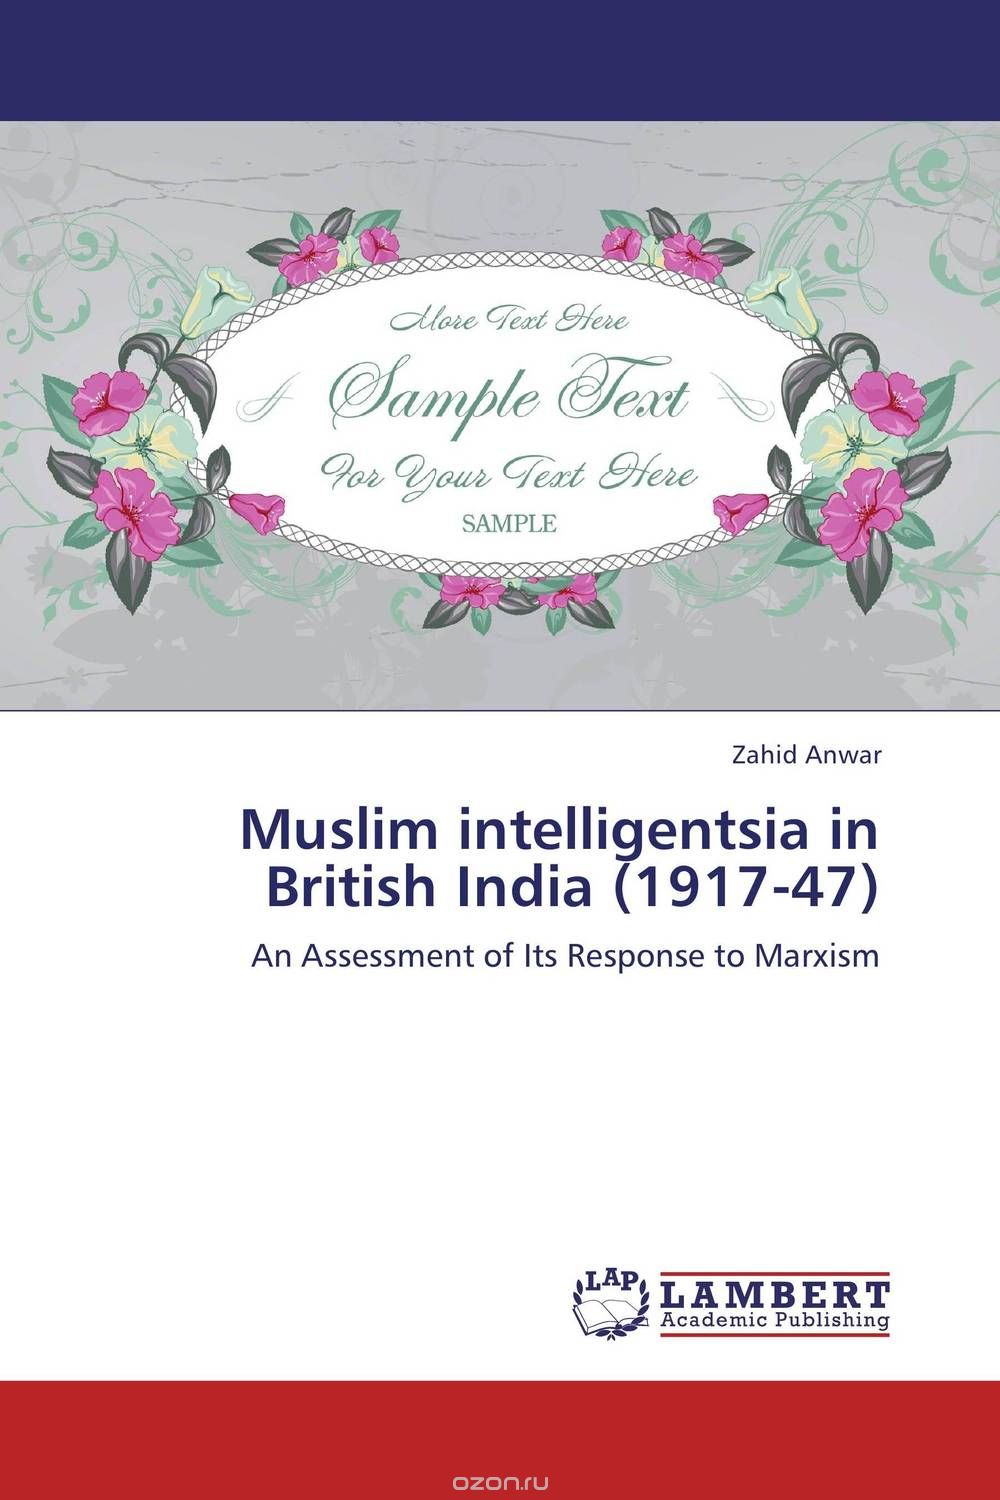 Скачать книгу "Muslim intelligentsia in British India (1917-47)"